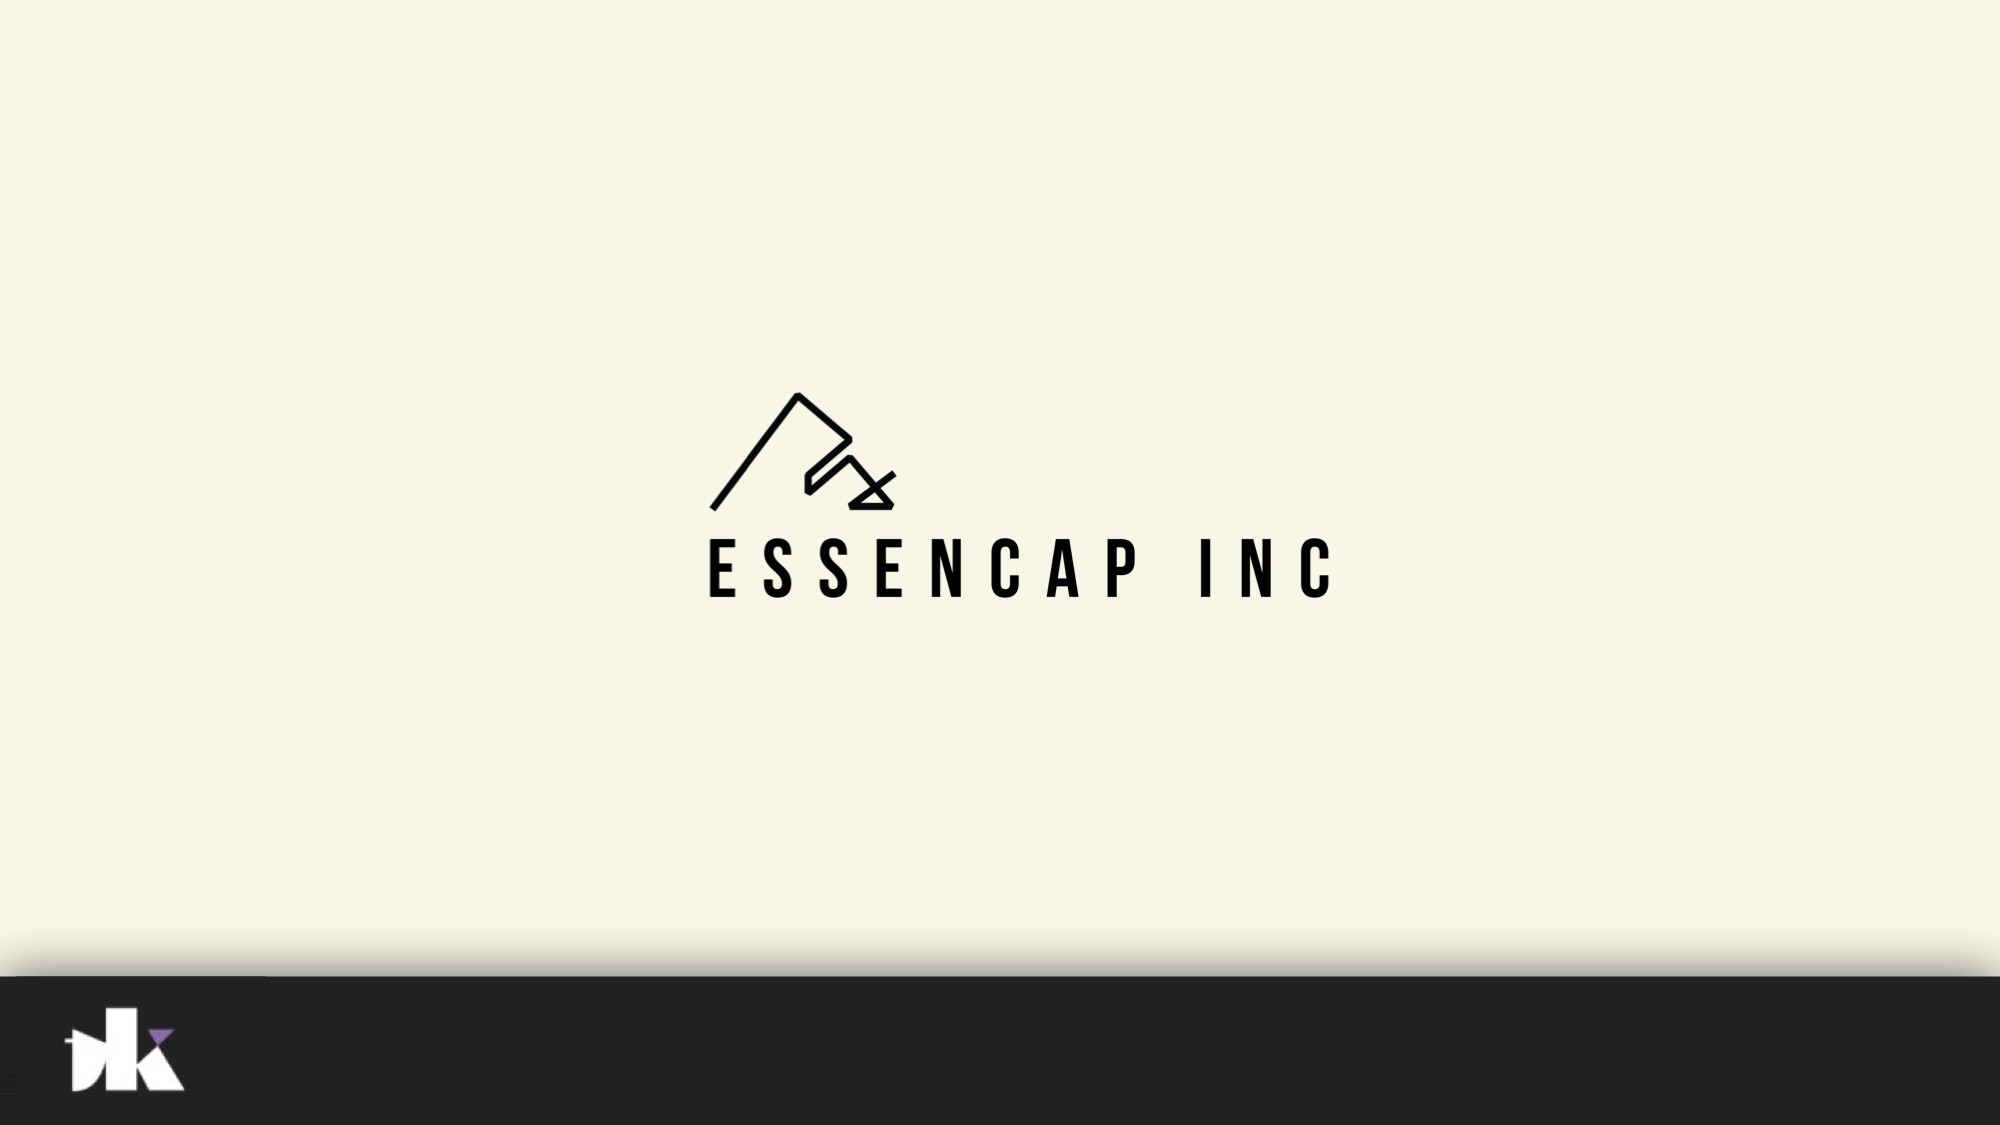 Essencap Branding Process 15